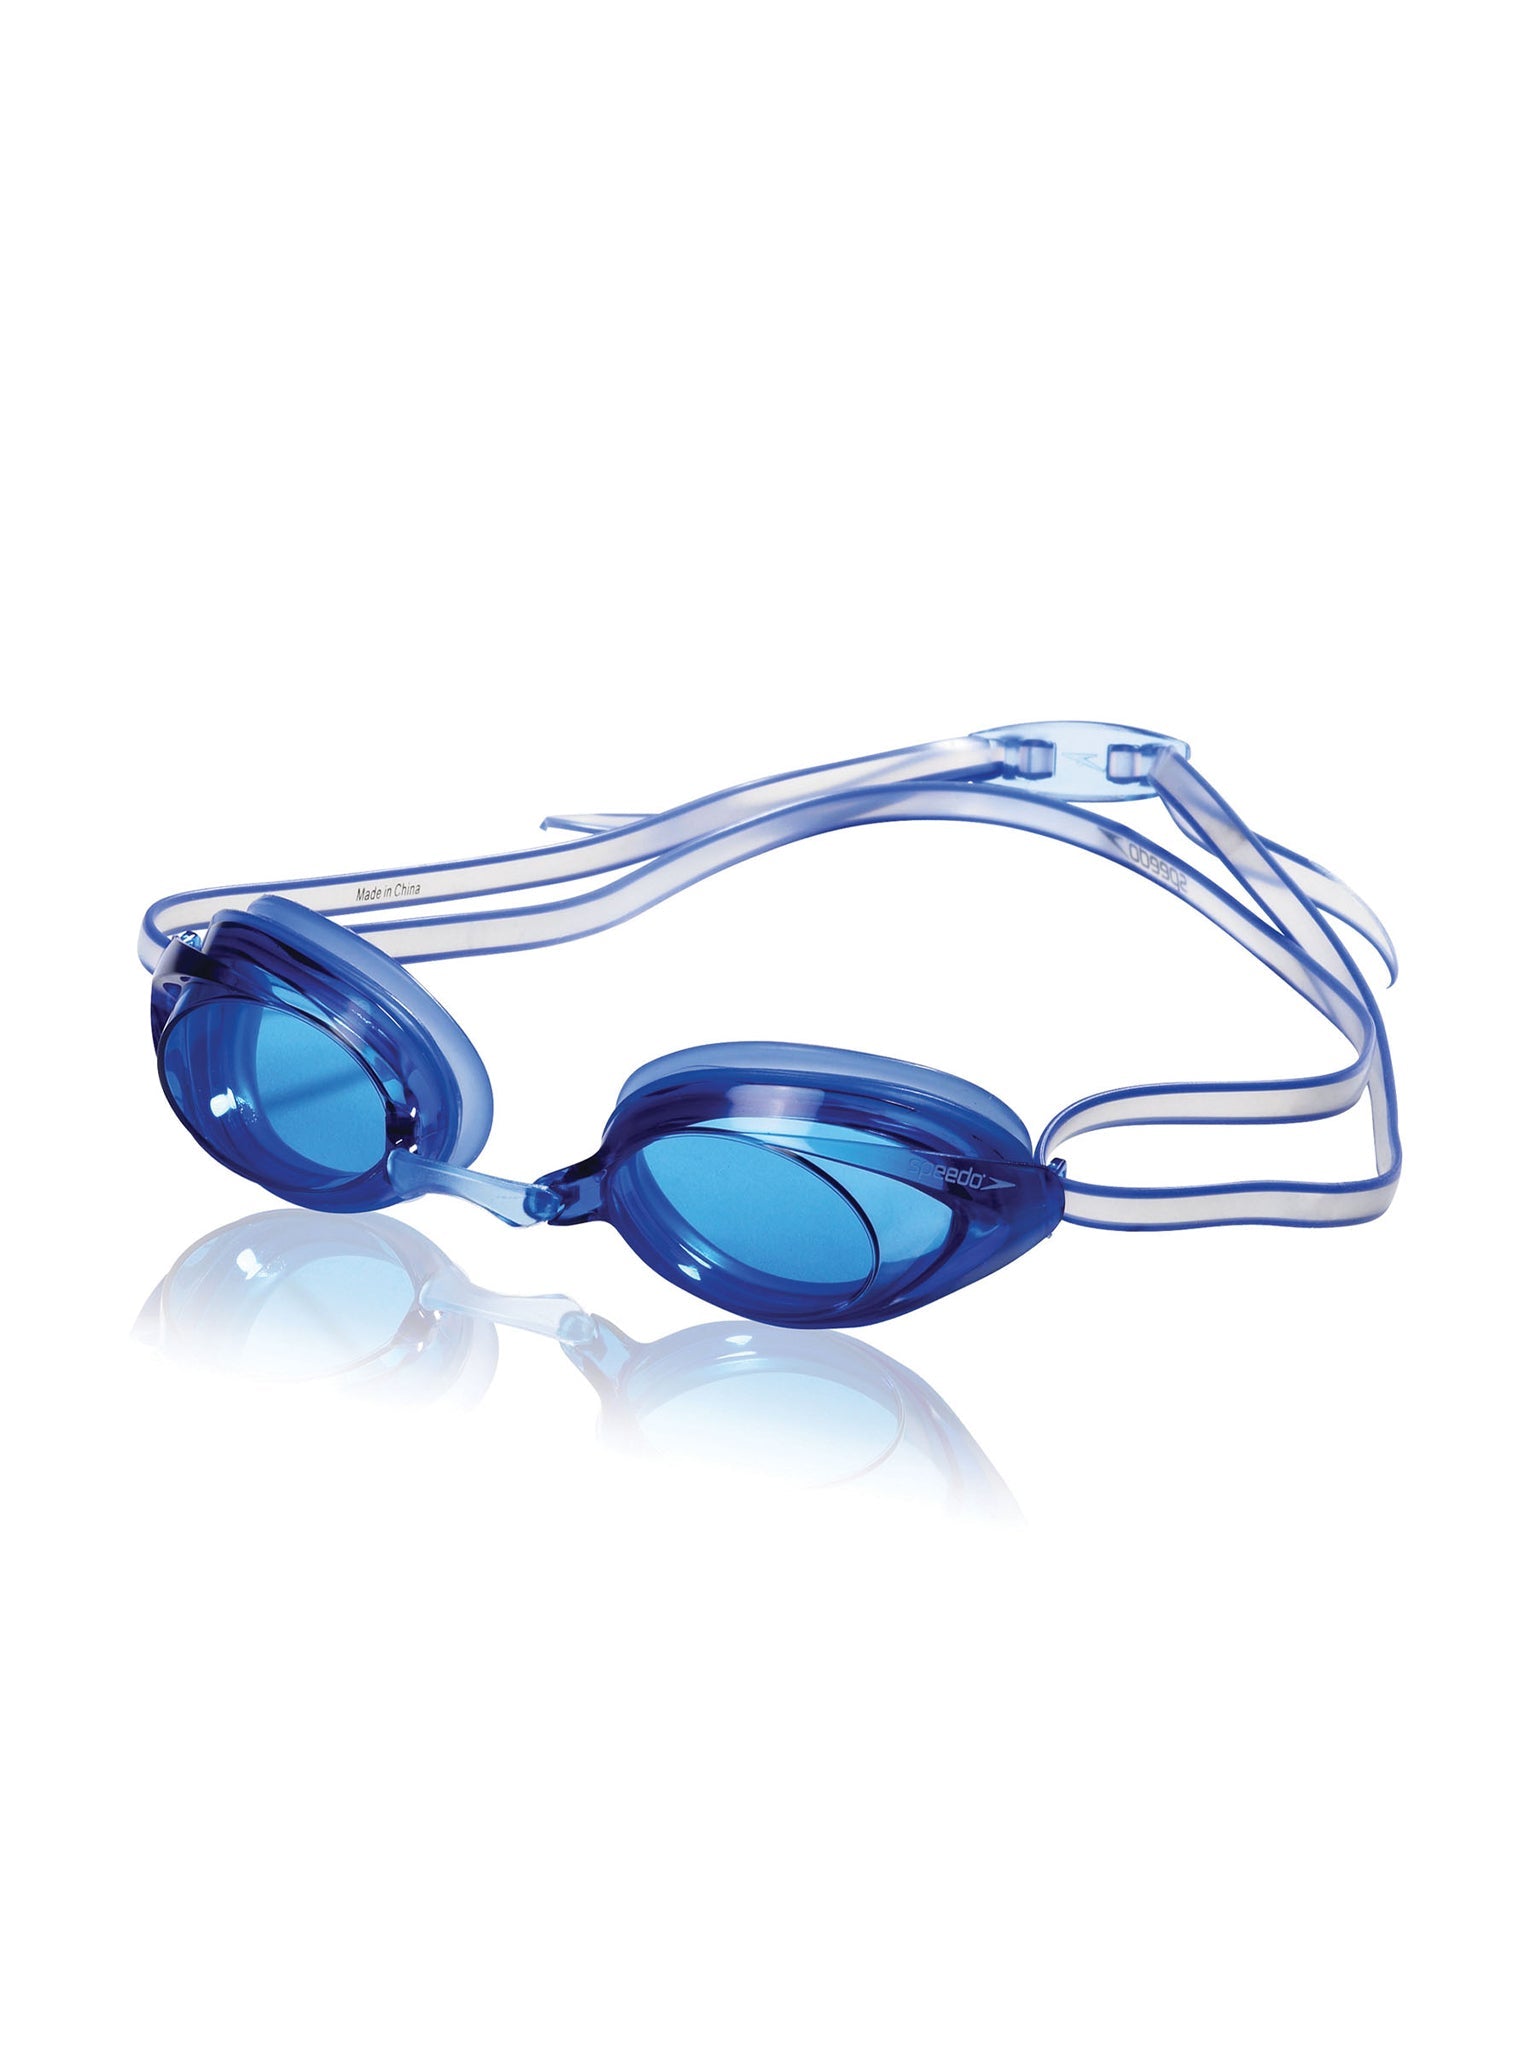 Lunettes de natation Vanquisher 2.0 Junior - Bleu/Bleu